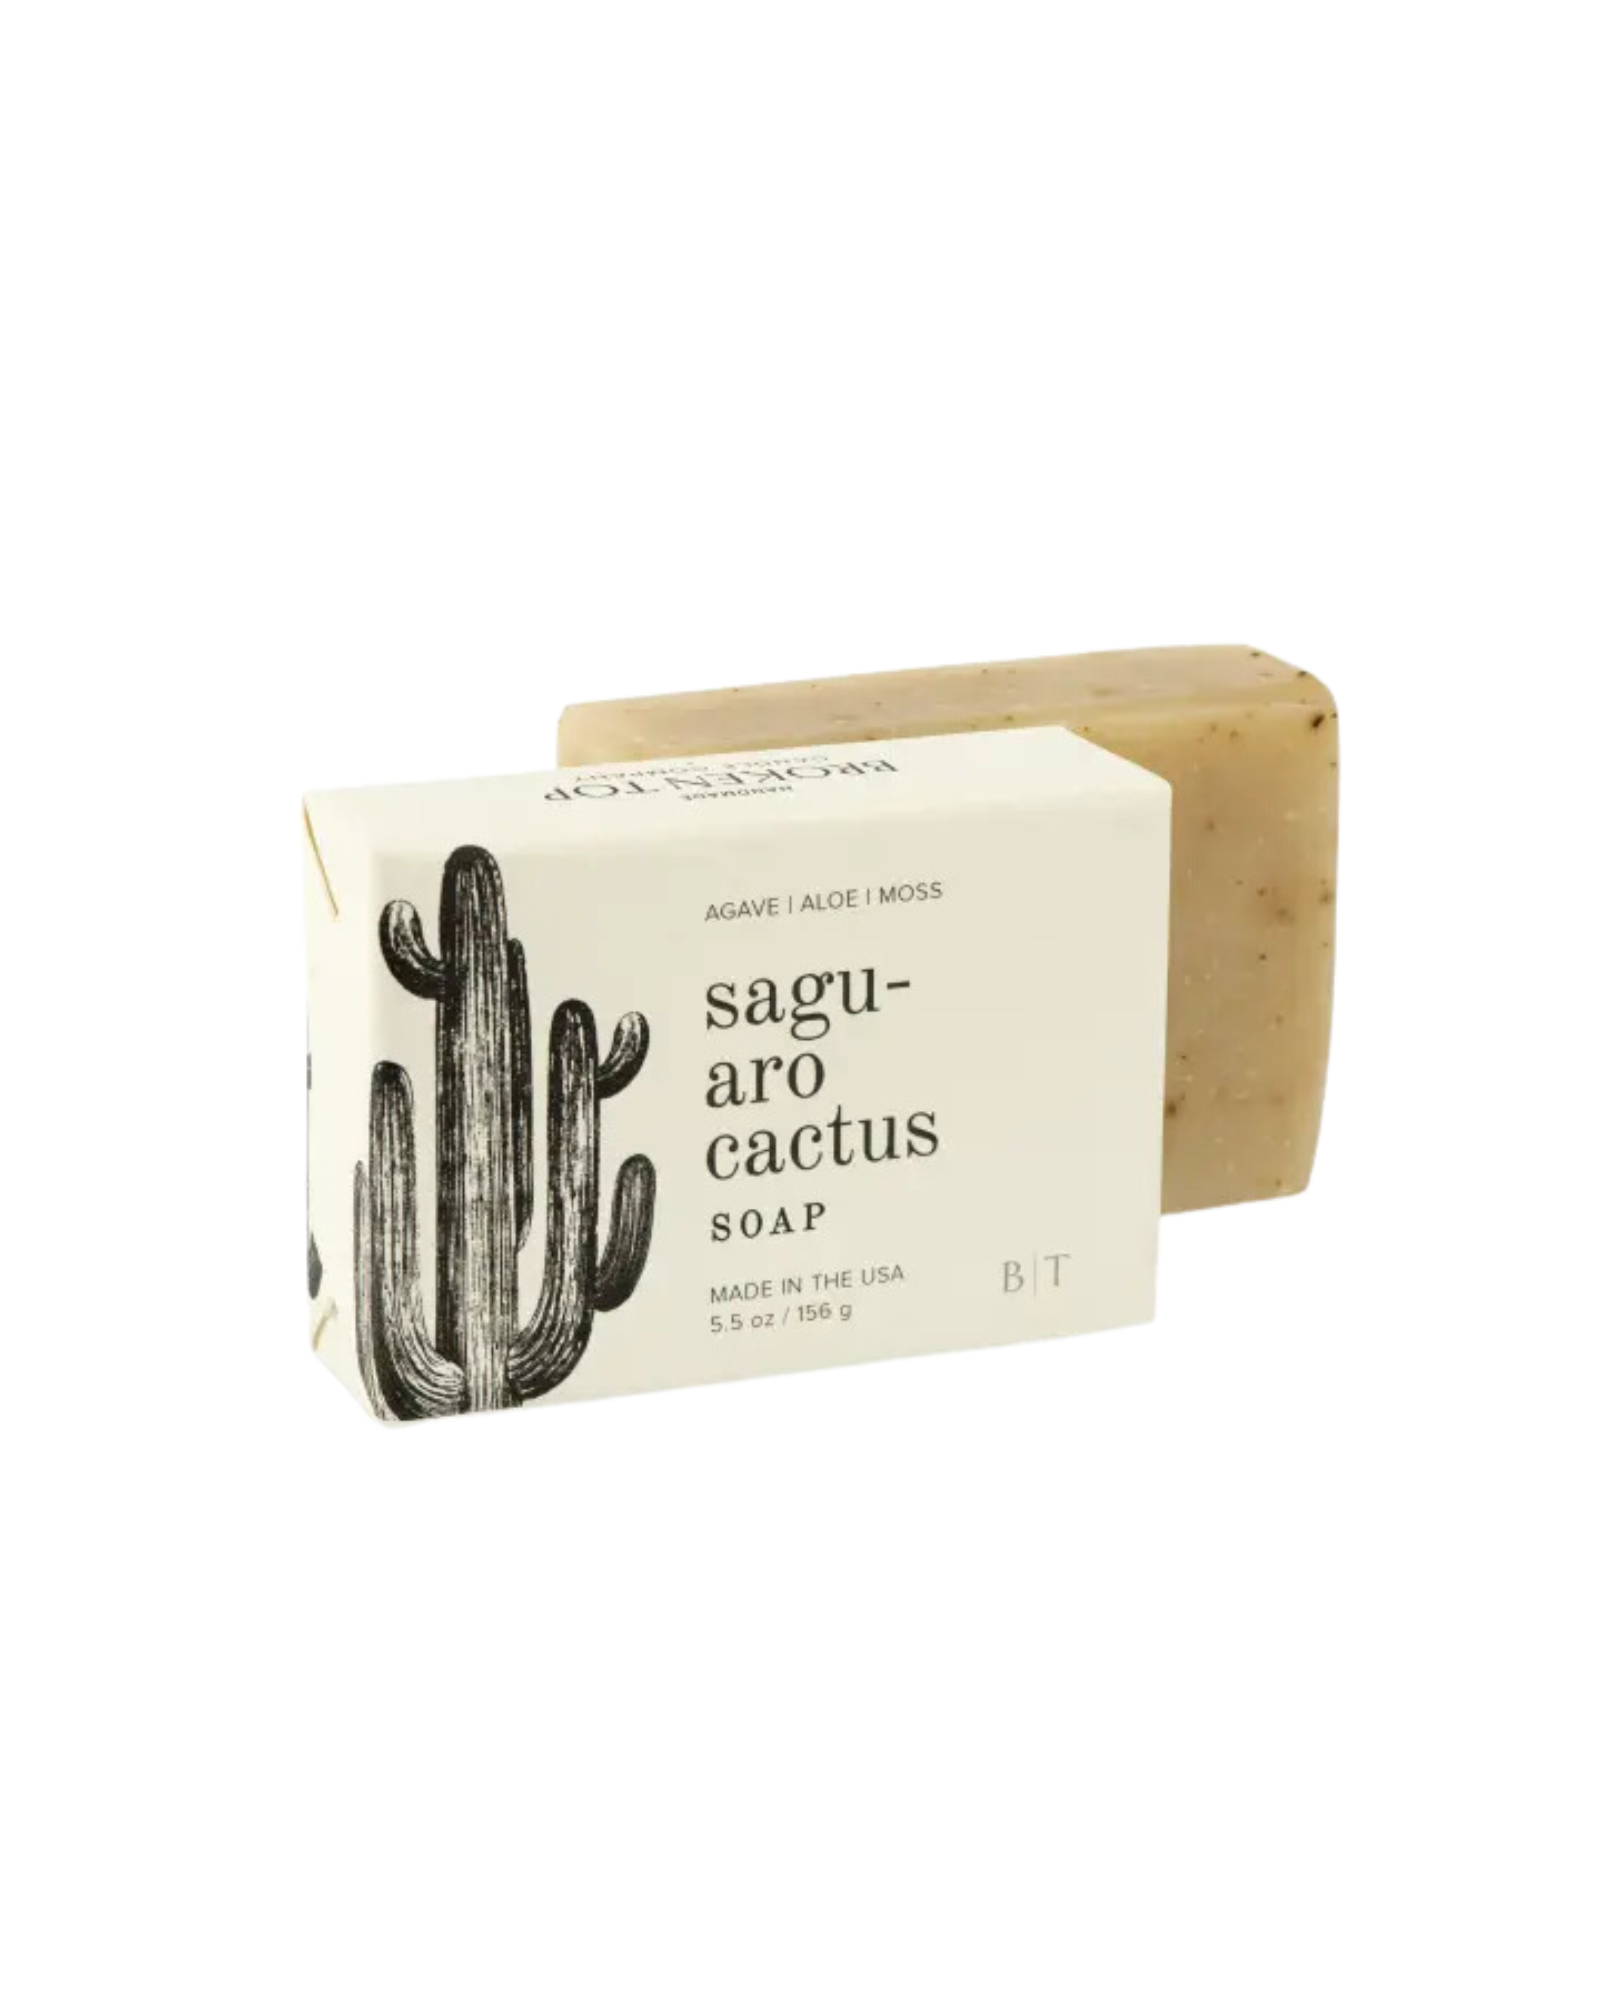 Saguaro Cactus Natural Bar Soap